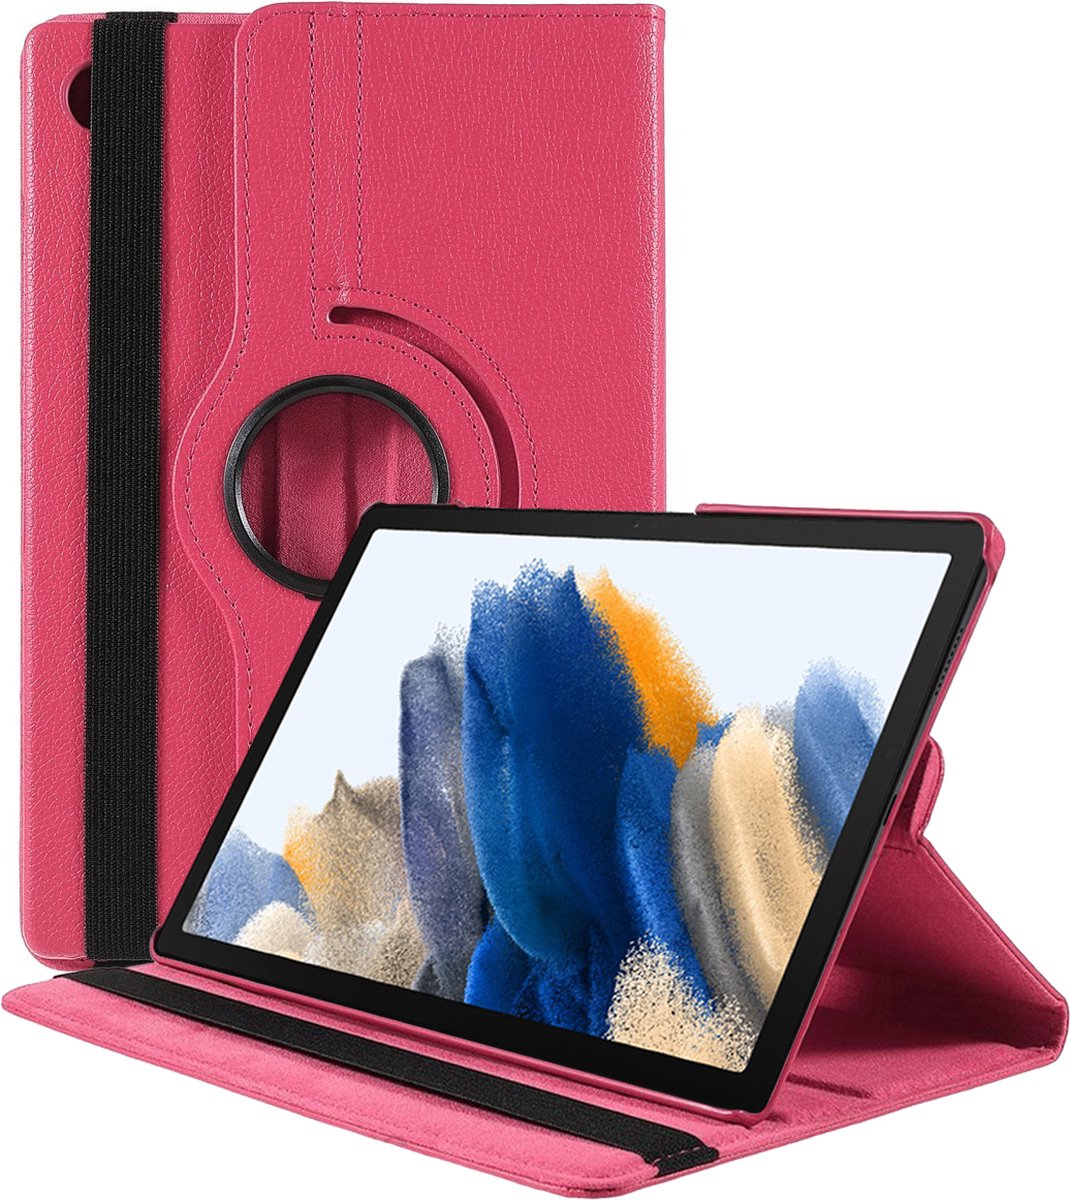 Etui Samsung Galaxy Tab A8 2021 10,5 pouces Or Rose - Etui Tablette Rotatif  avec Support